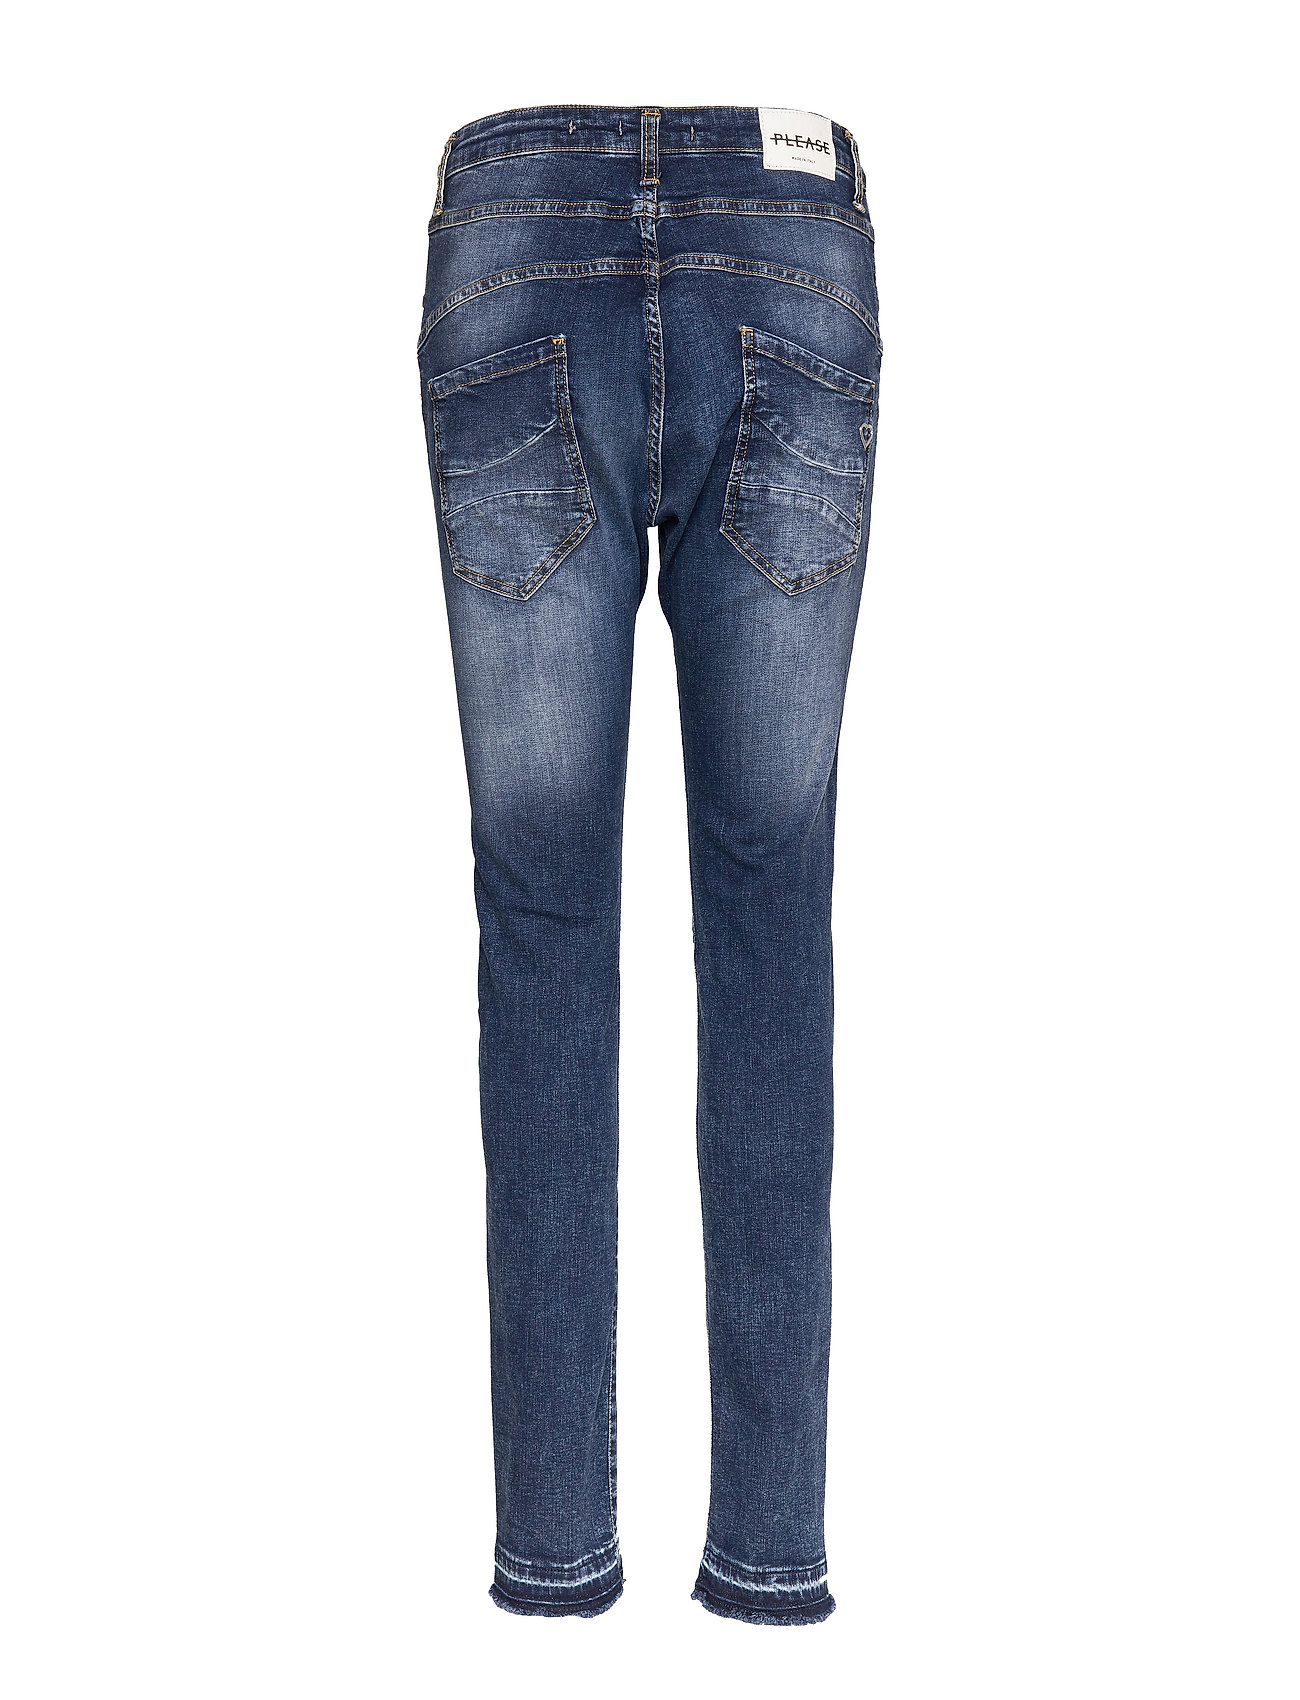 Please skinny jeans – C Berlin Skinny Jeans Blå Please Jeans til dame i - Pashion.dk